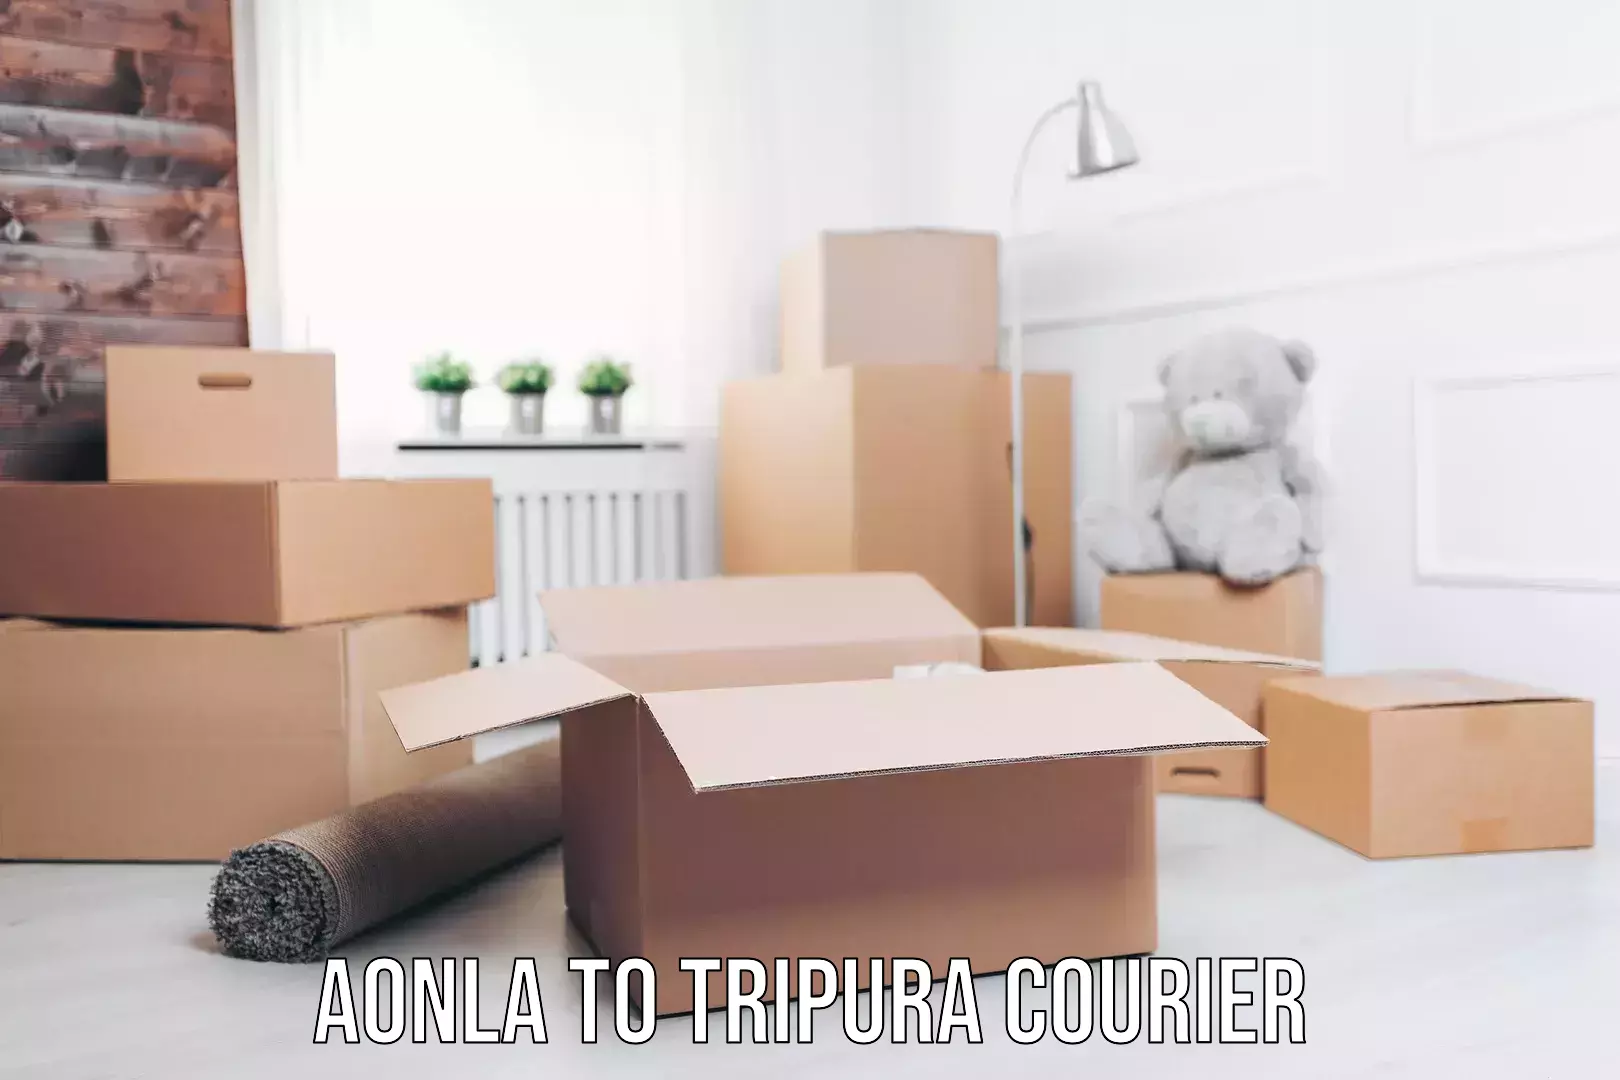 Efficient order fulfillment Aonla to Tripura